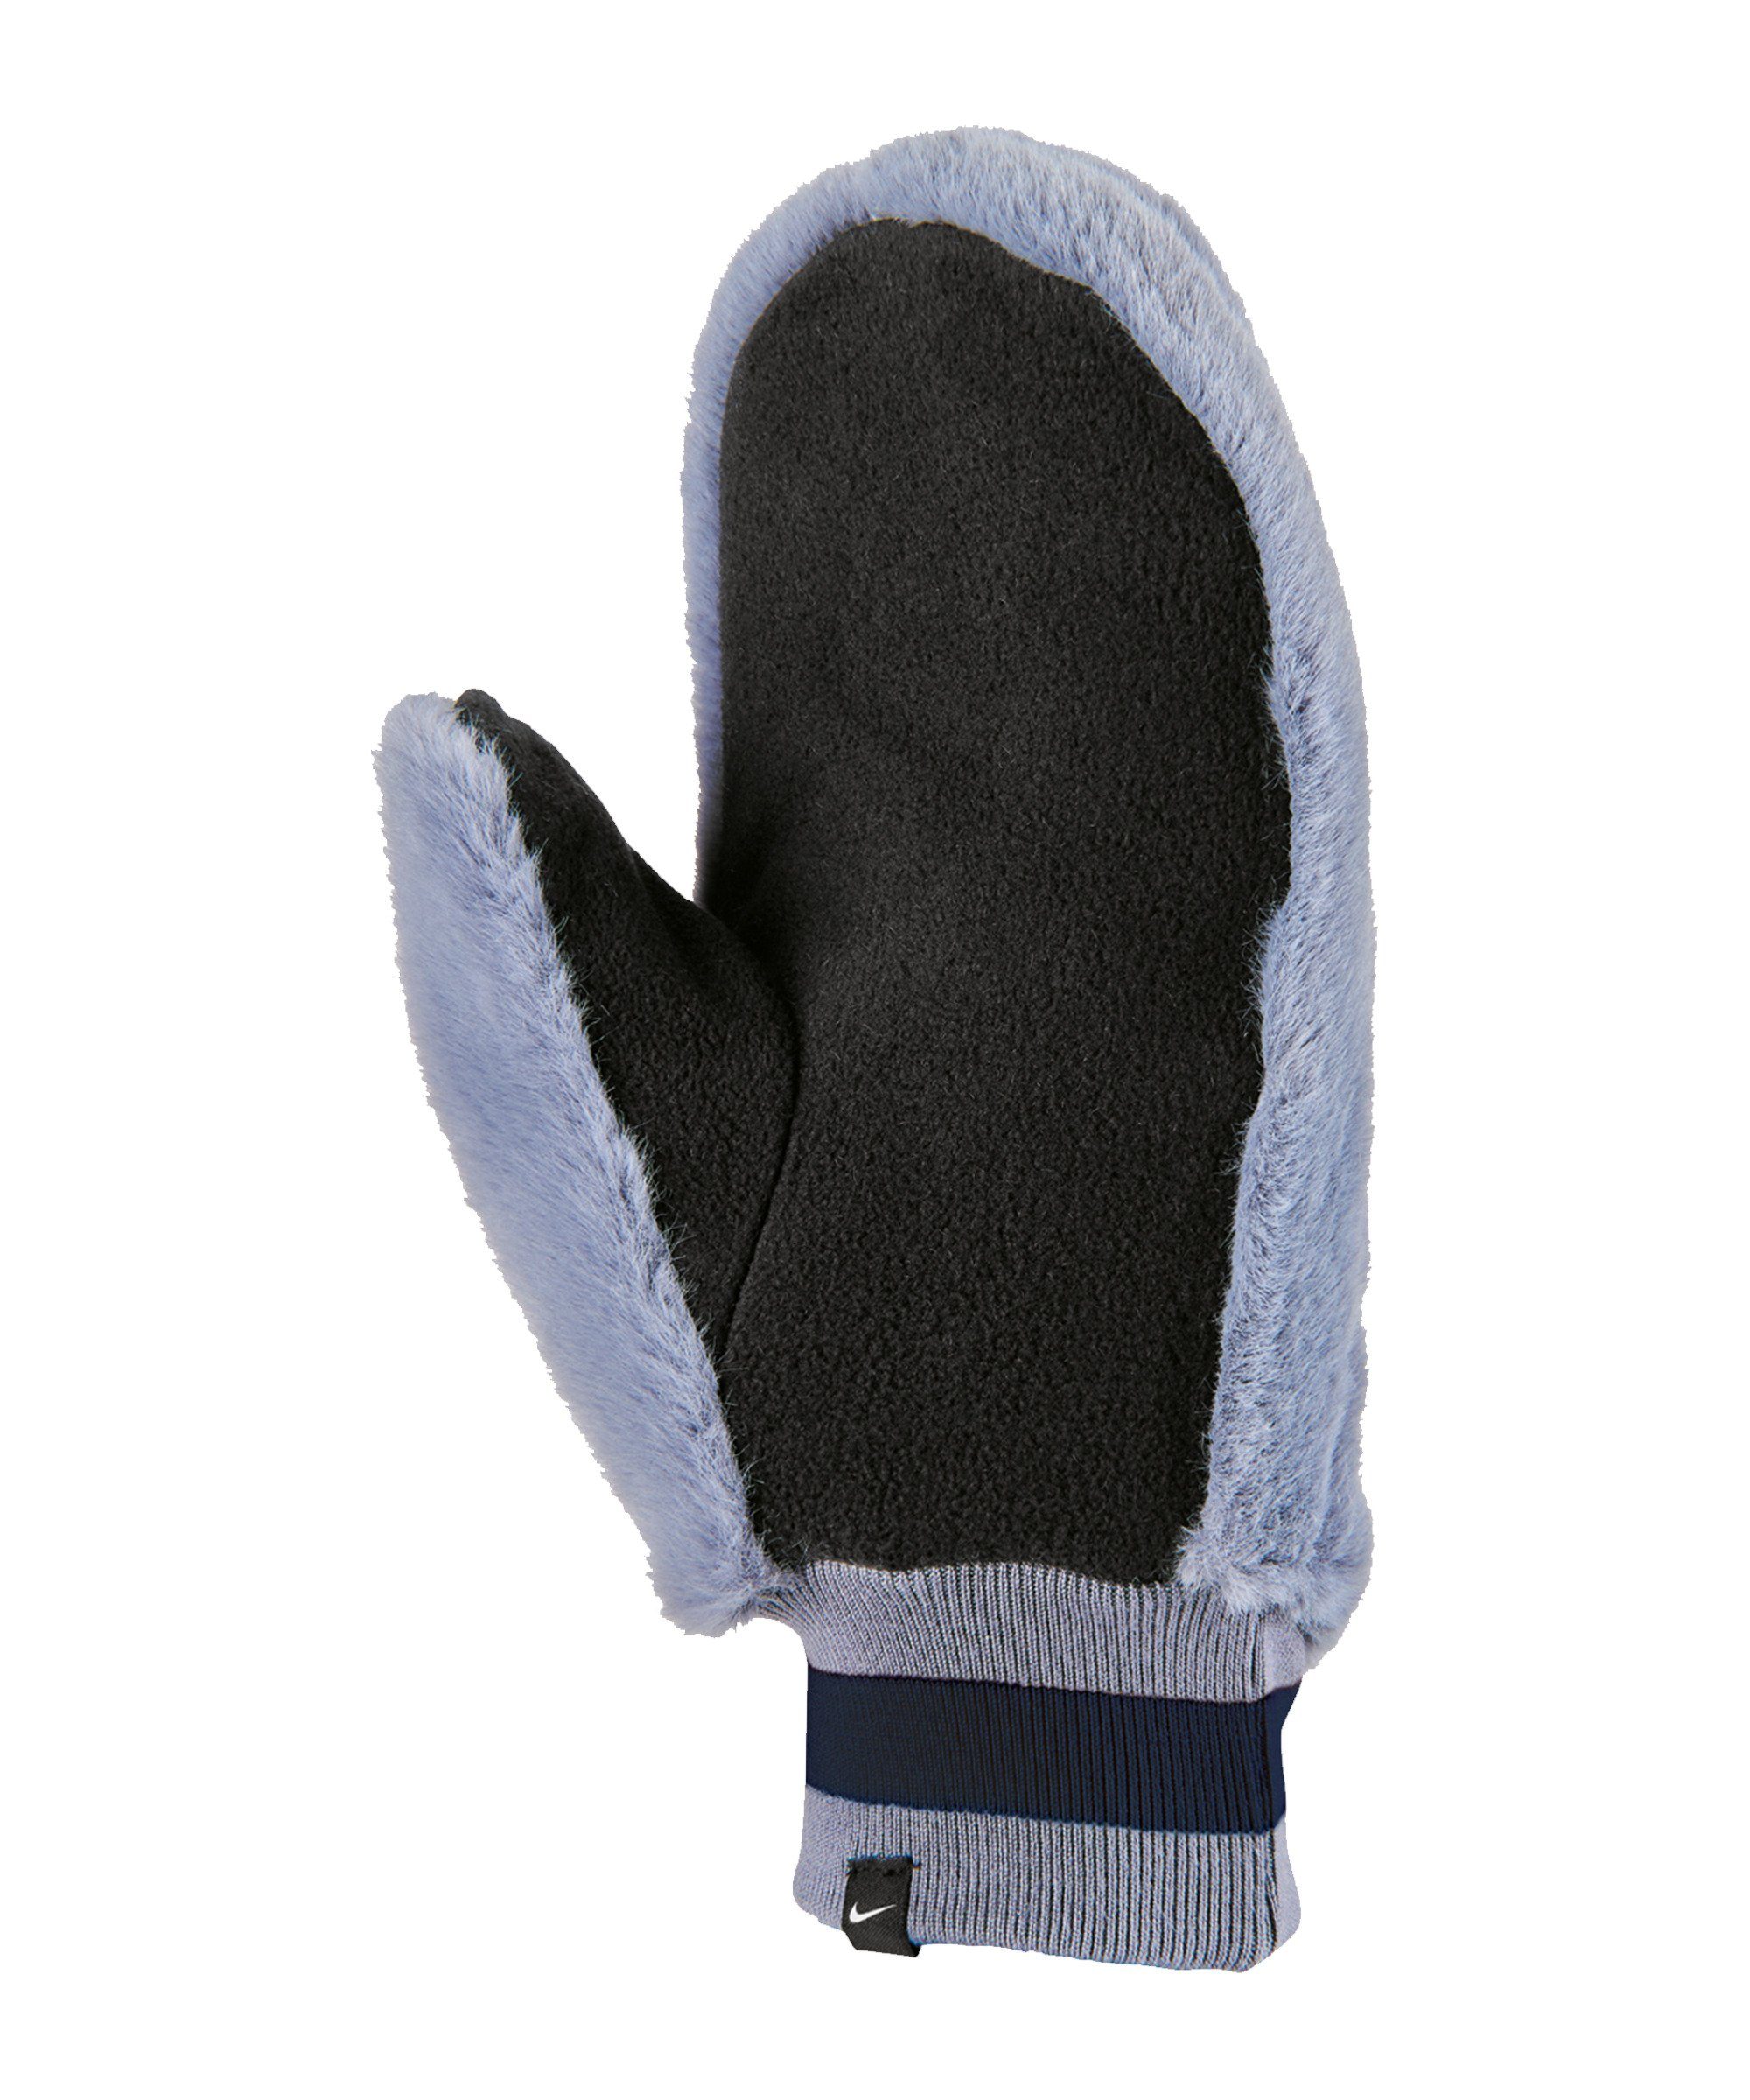 Nike Handschuhe Mittens lilaschwarz Feldspielerhandschuhe Warm